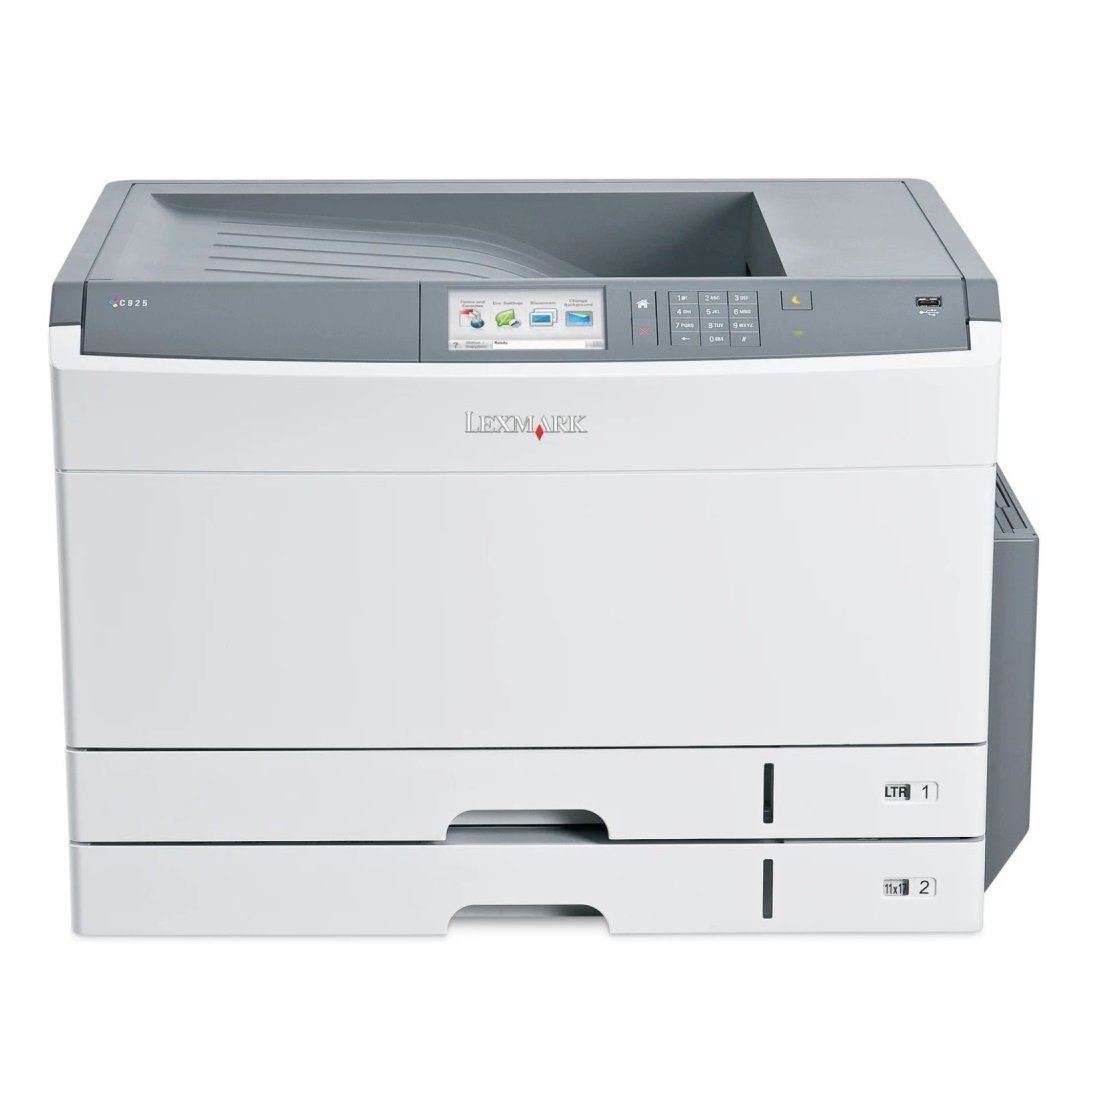 Lexmark Desktop Color Printer 11x17, 2 Trays, Network, F – Absolute Toner